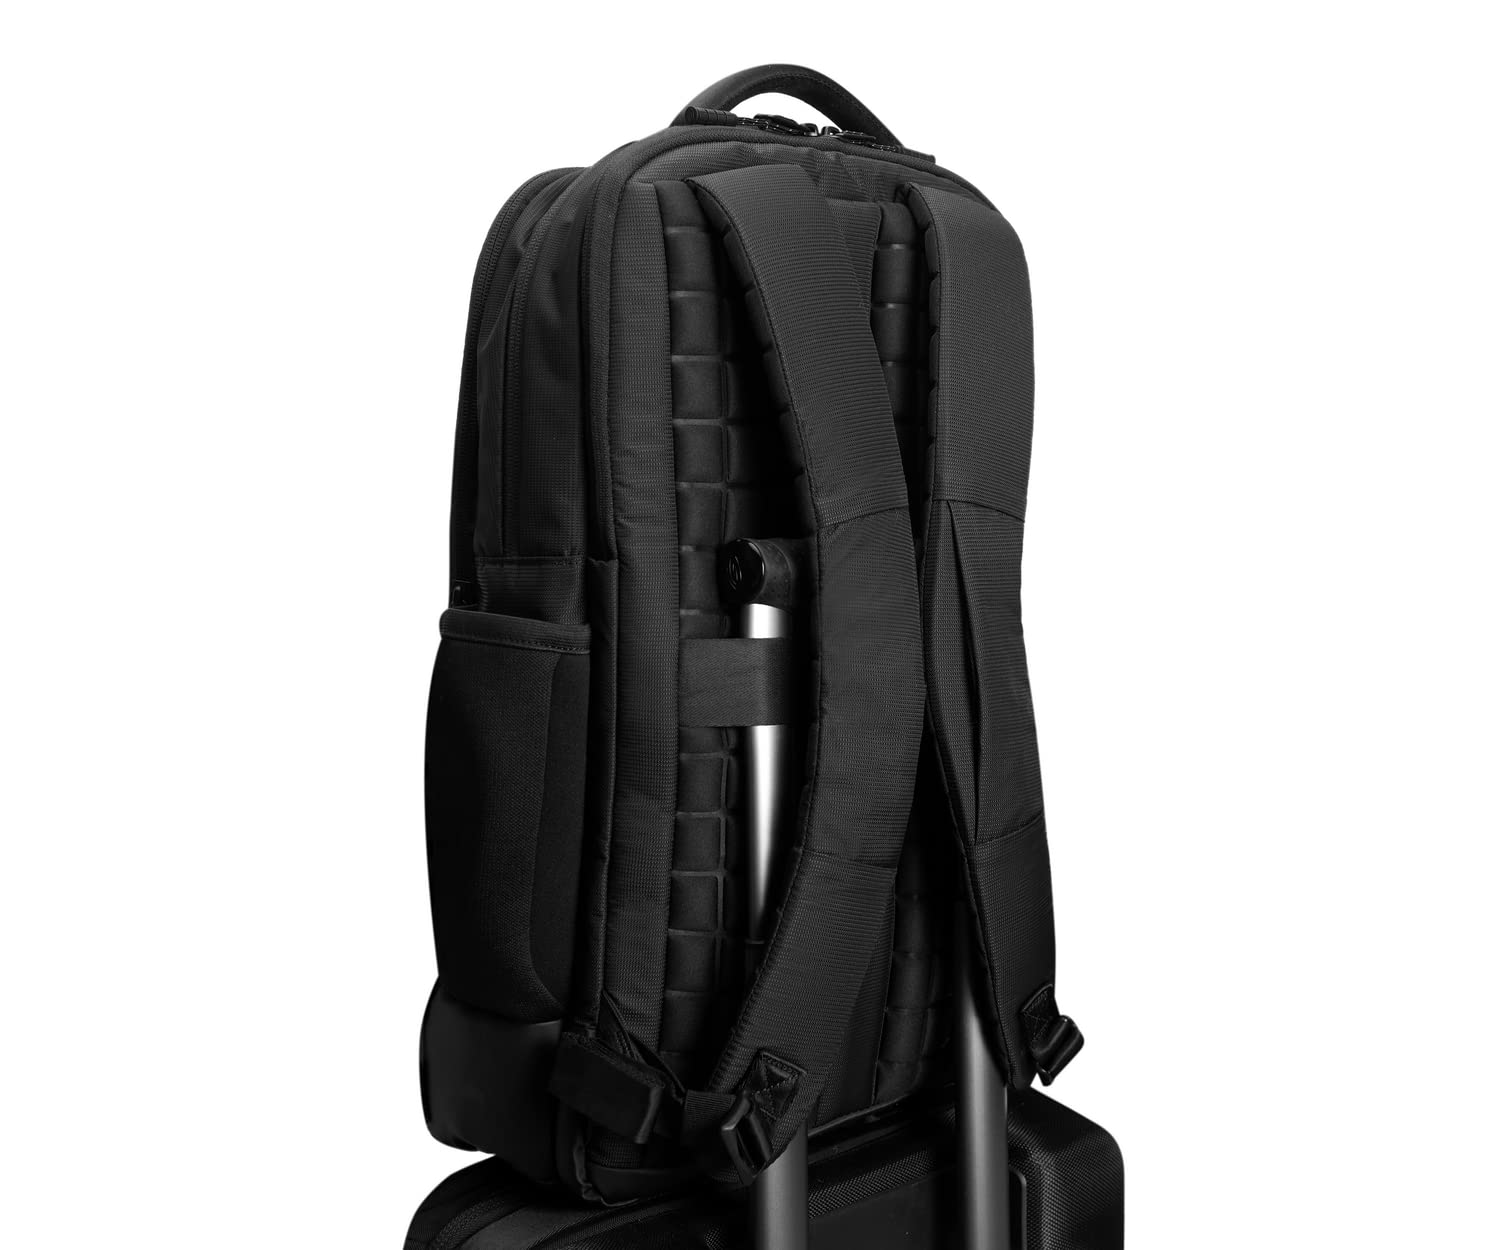 Timbuk2 Authority Laptop Backpack Deluxe, Eco Nightfall